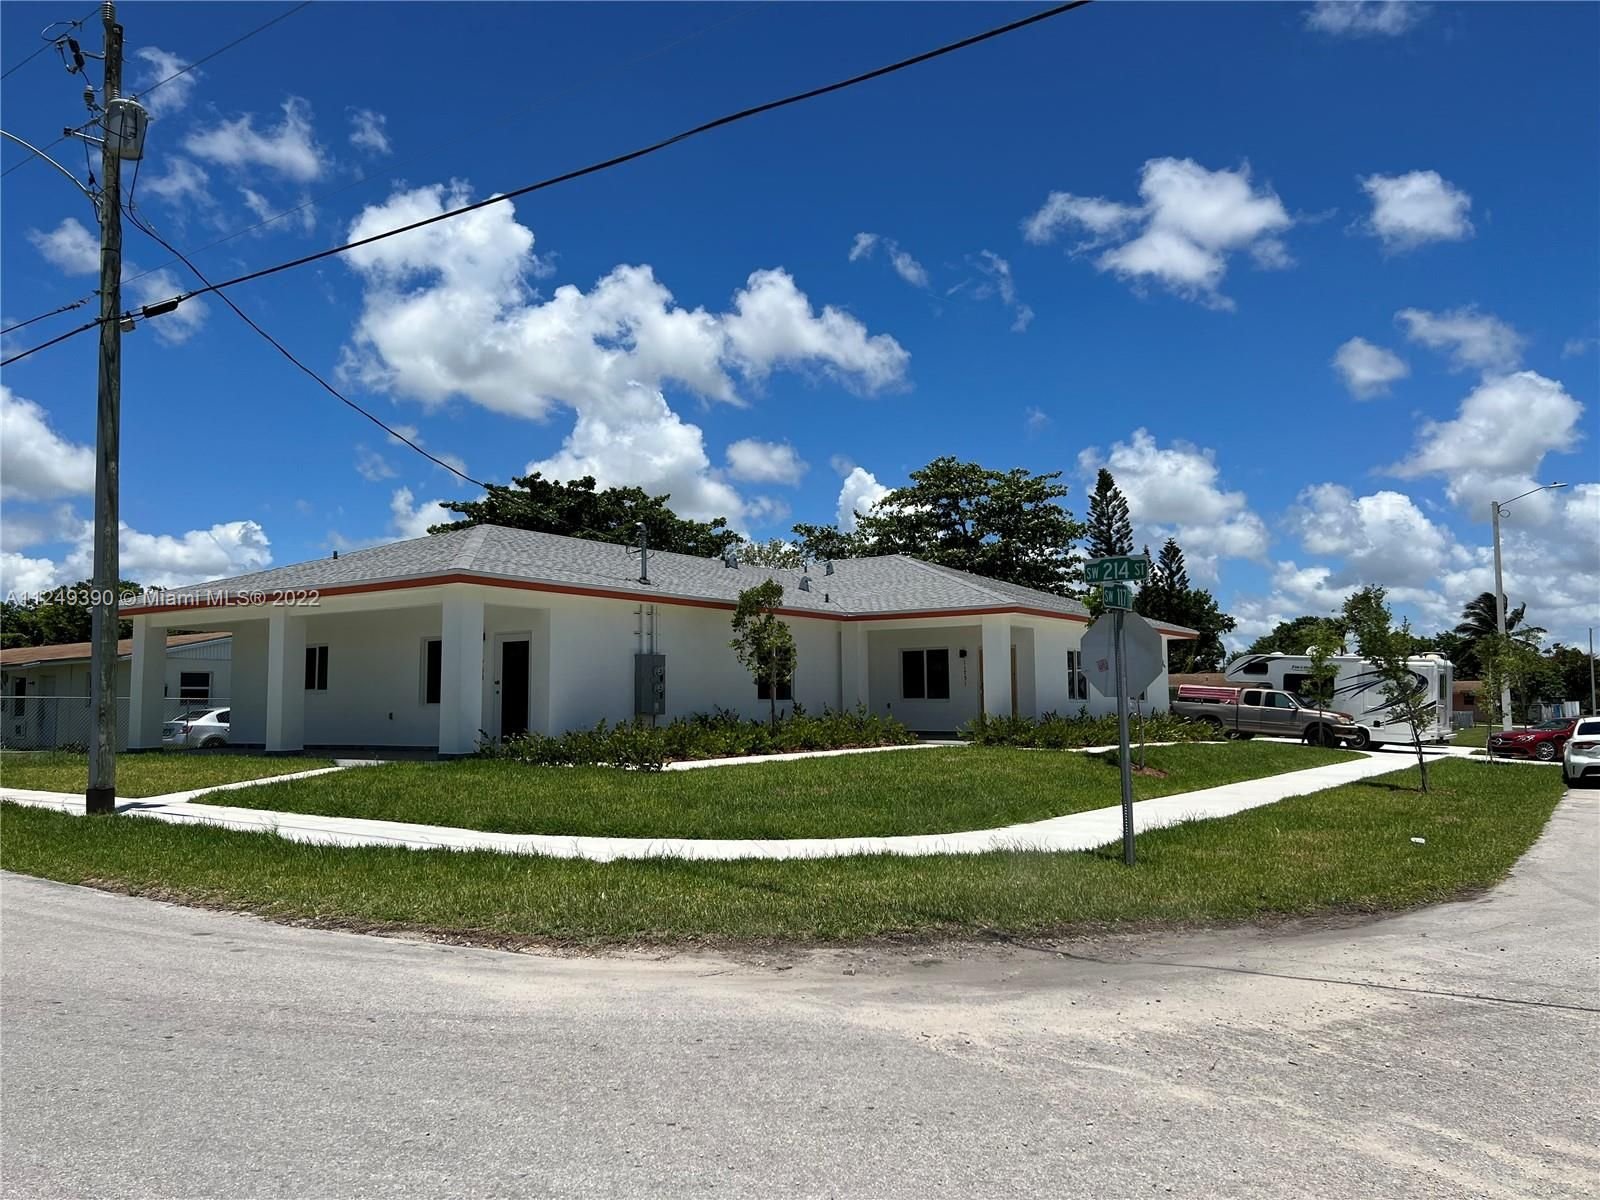 Real estate property located at 11753 214 Street #11753, Miami-Dade County, Miami, FL